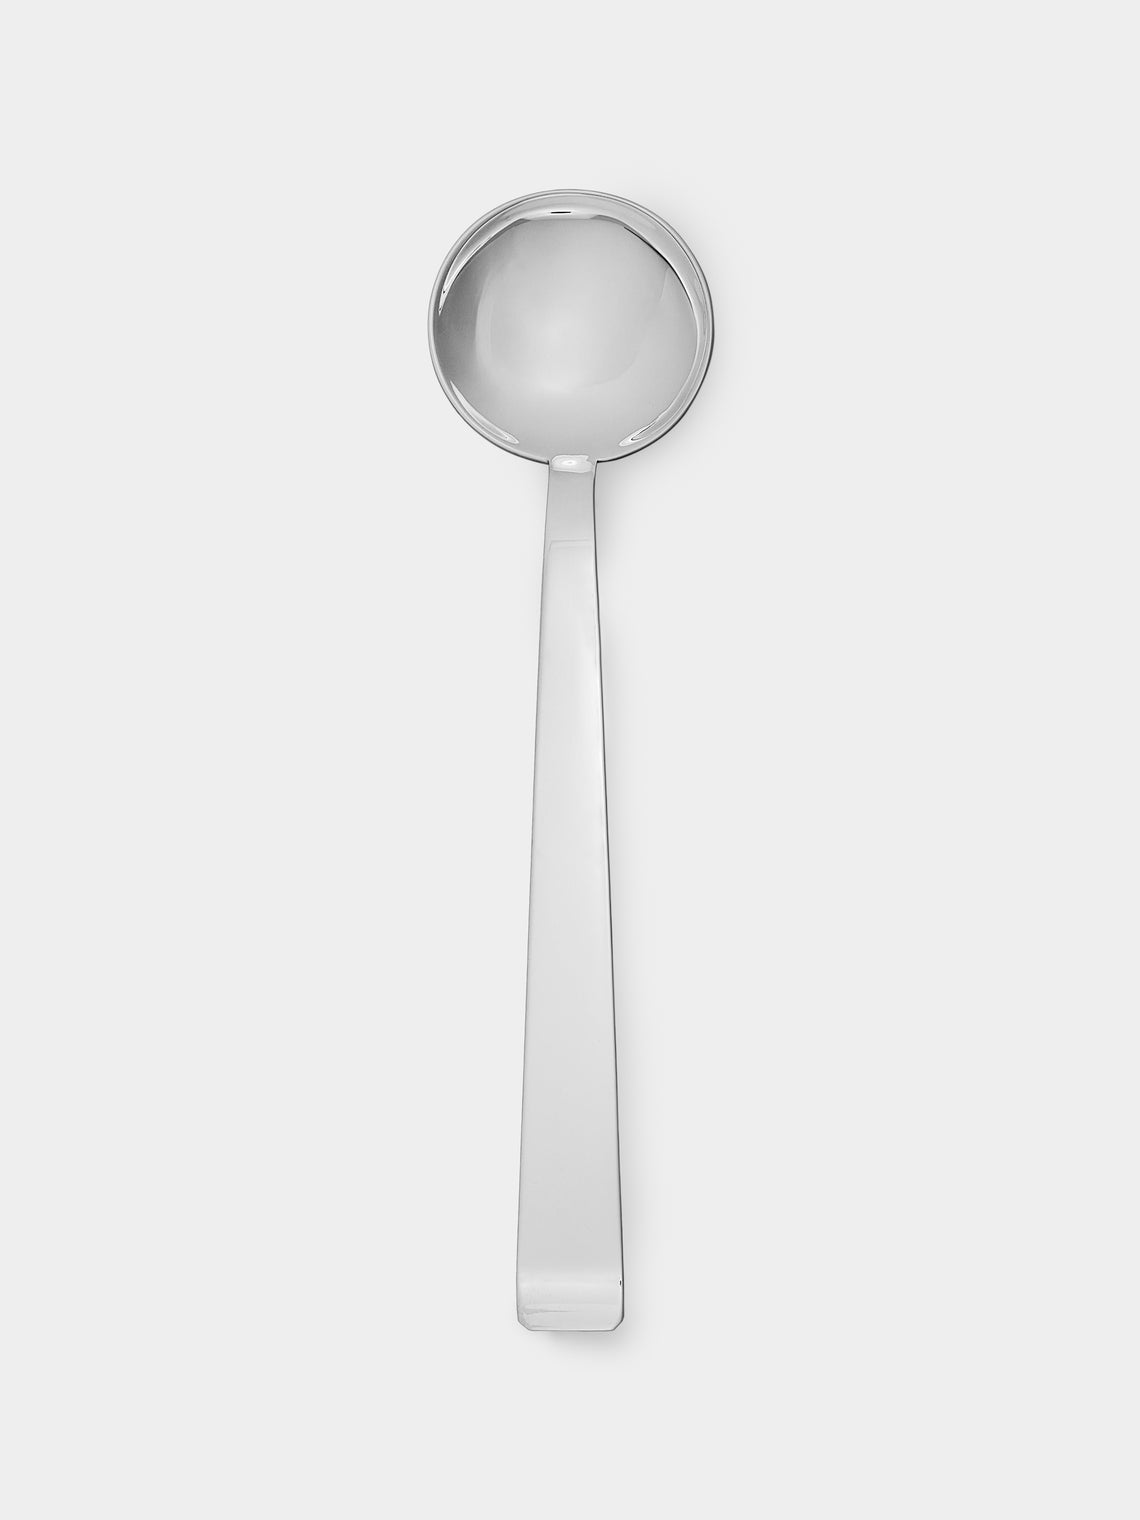 Wiener Silber Manufactur - Josef Hoffmann 135 Silver-Plated Dinner Spoon -  - ABASK - 